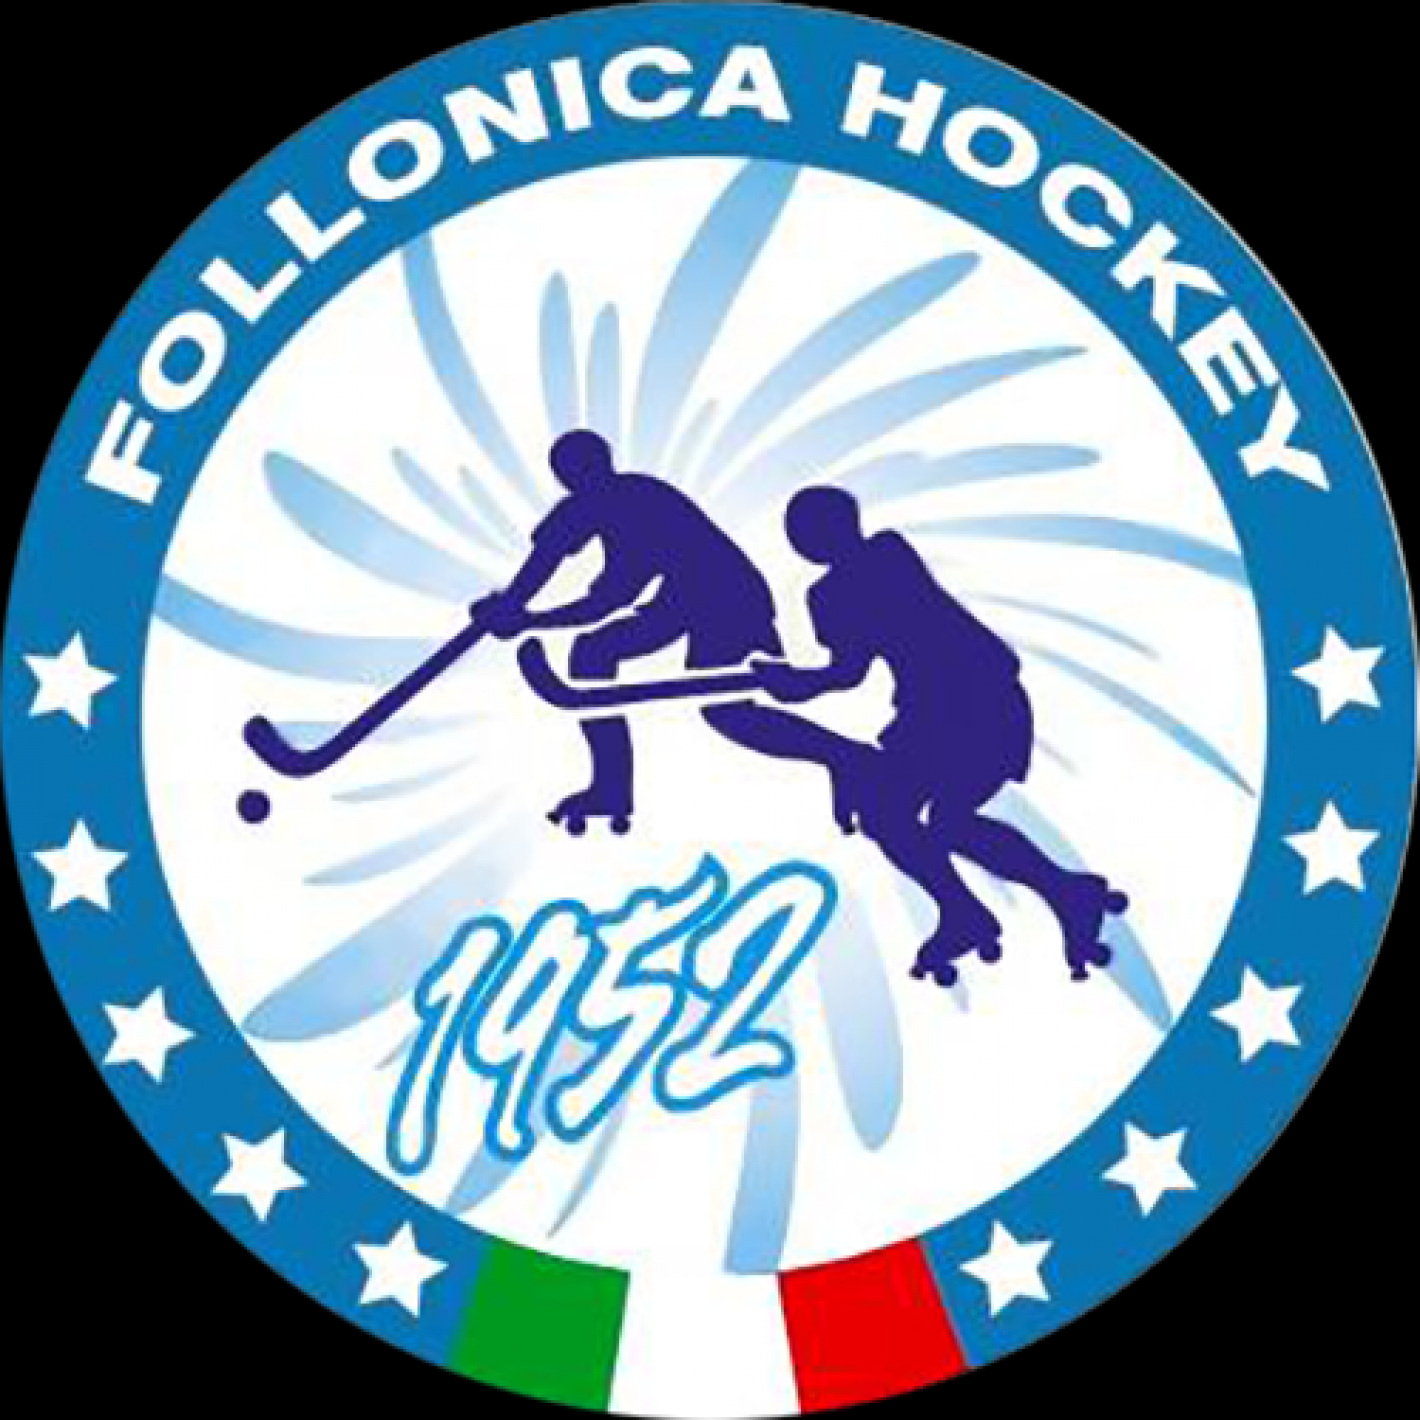 images/2021_foto_hockey_pista/medium/000000_follonica_logo.png